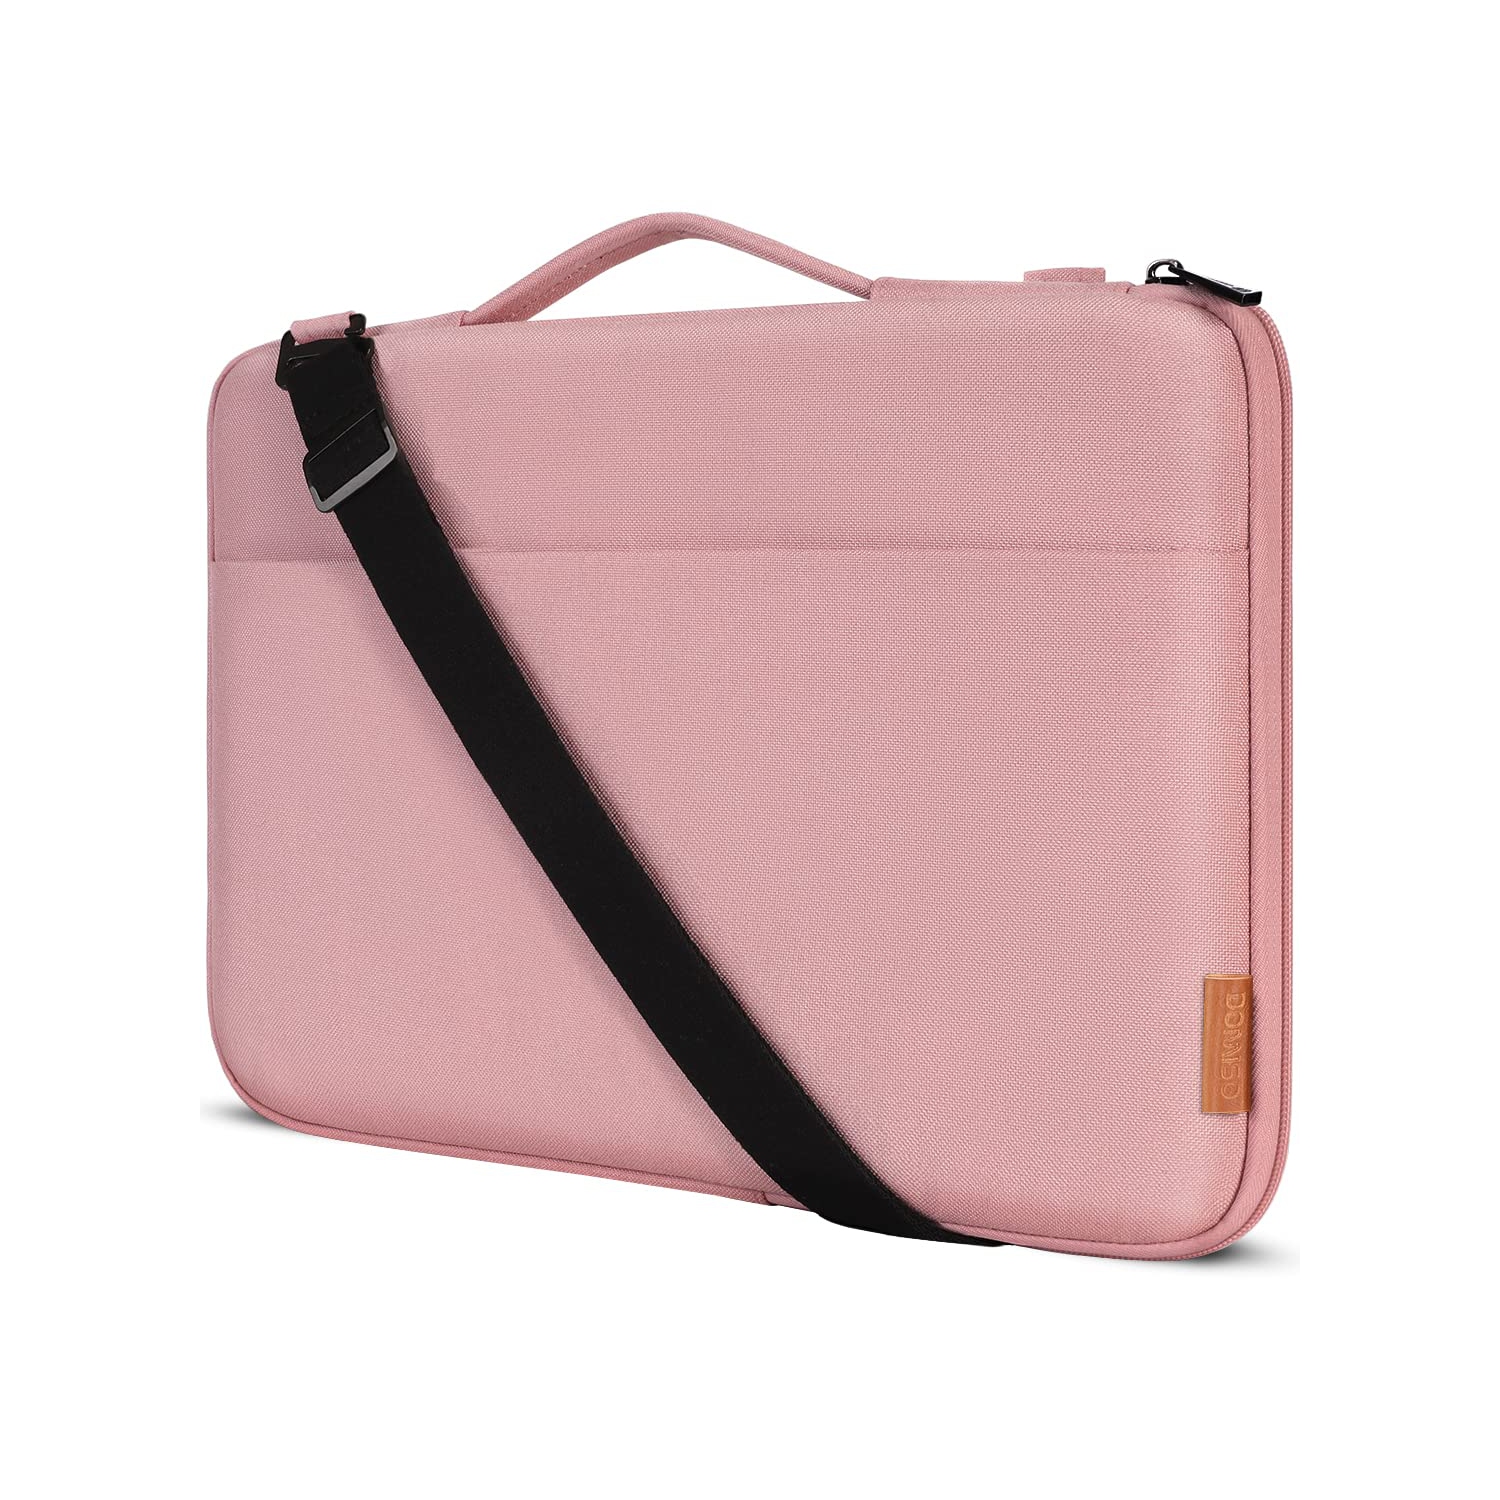 17.3 Inch Laptop Bag Cover Waterproof Shockproof Notebook Sleeve Case Shoulder Bag Protective Cover for 17.3" HP Pavilion 17/HP Envy 17/HP 17/MSI/Lenovo IdeaPad 321,Pink